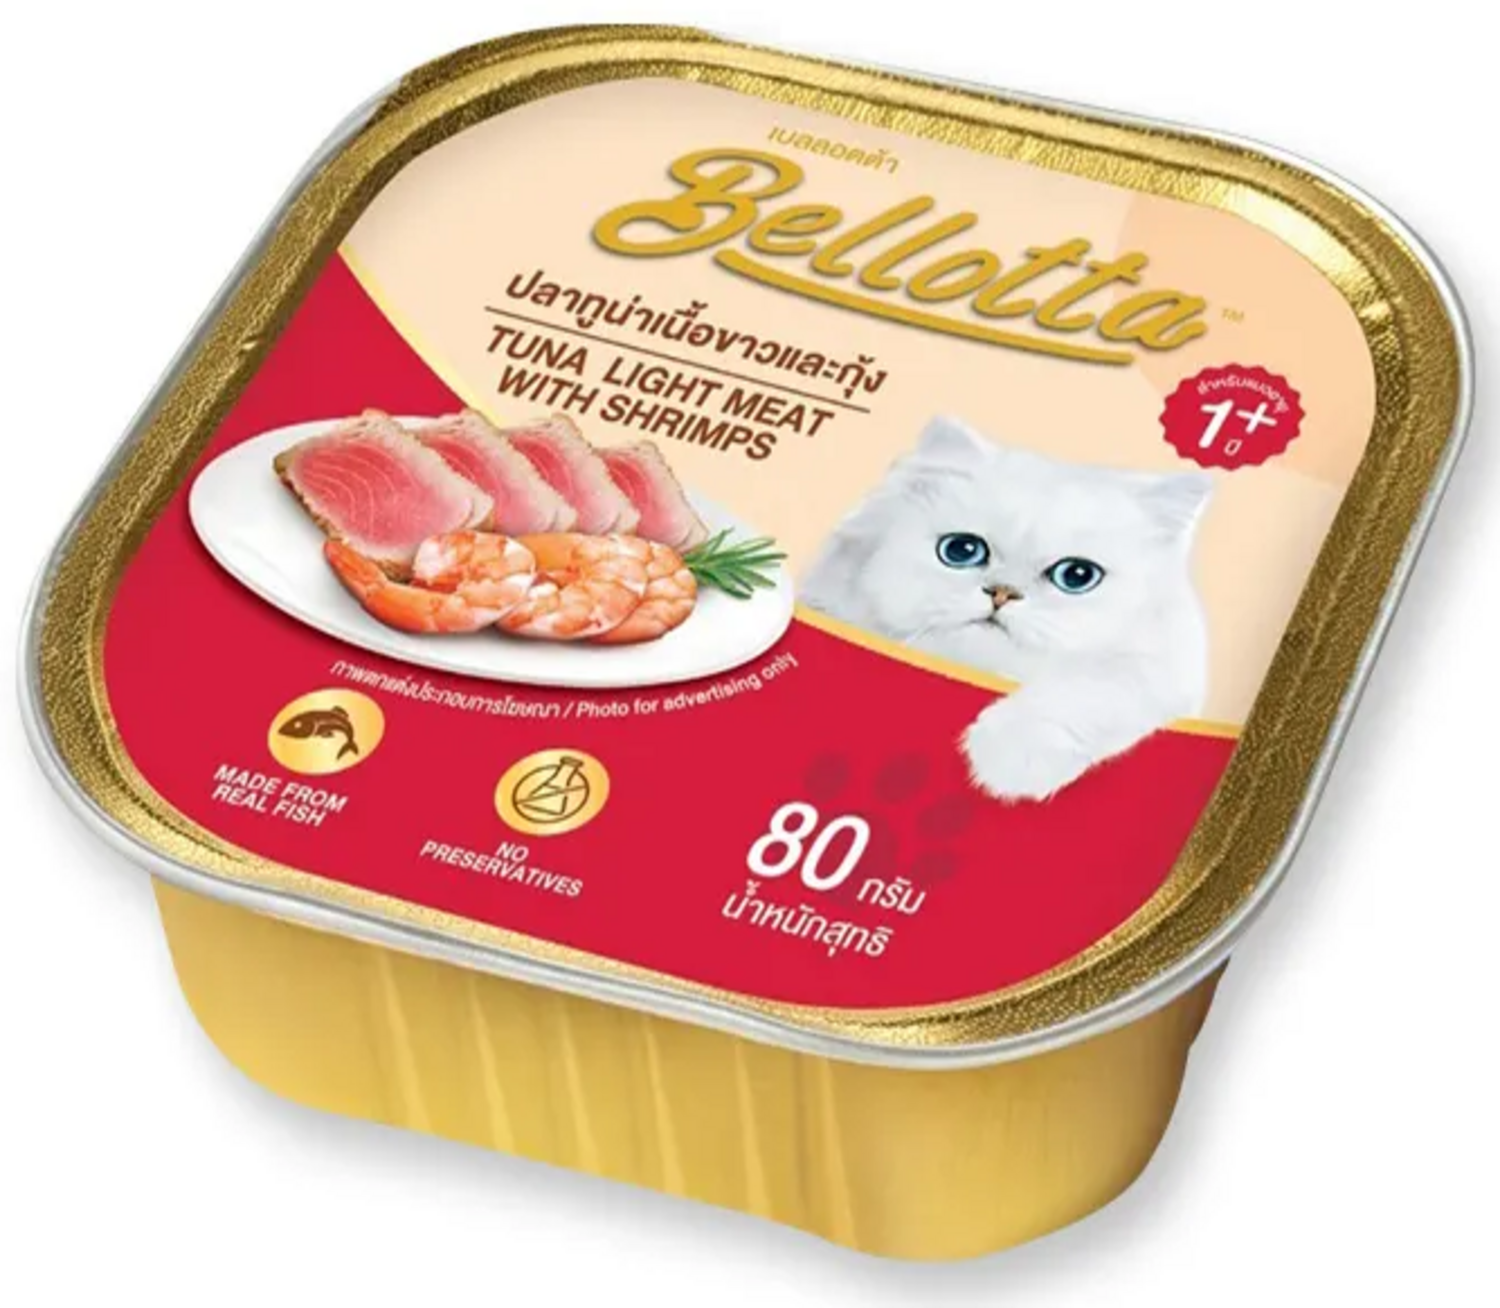 Bellotta - Tuna Light Meat With Shrimp - Cup